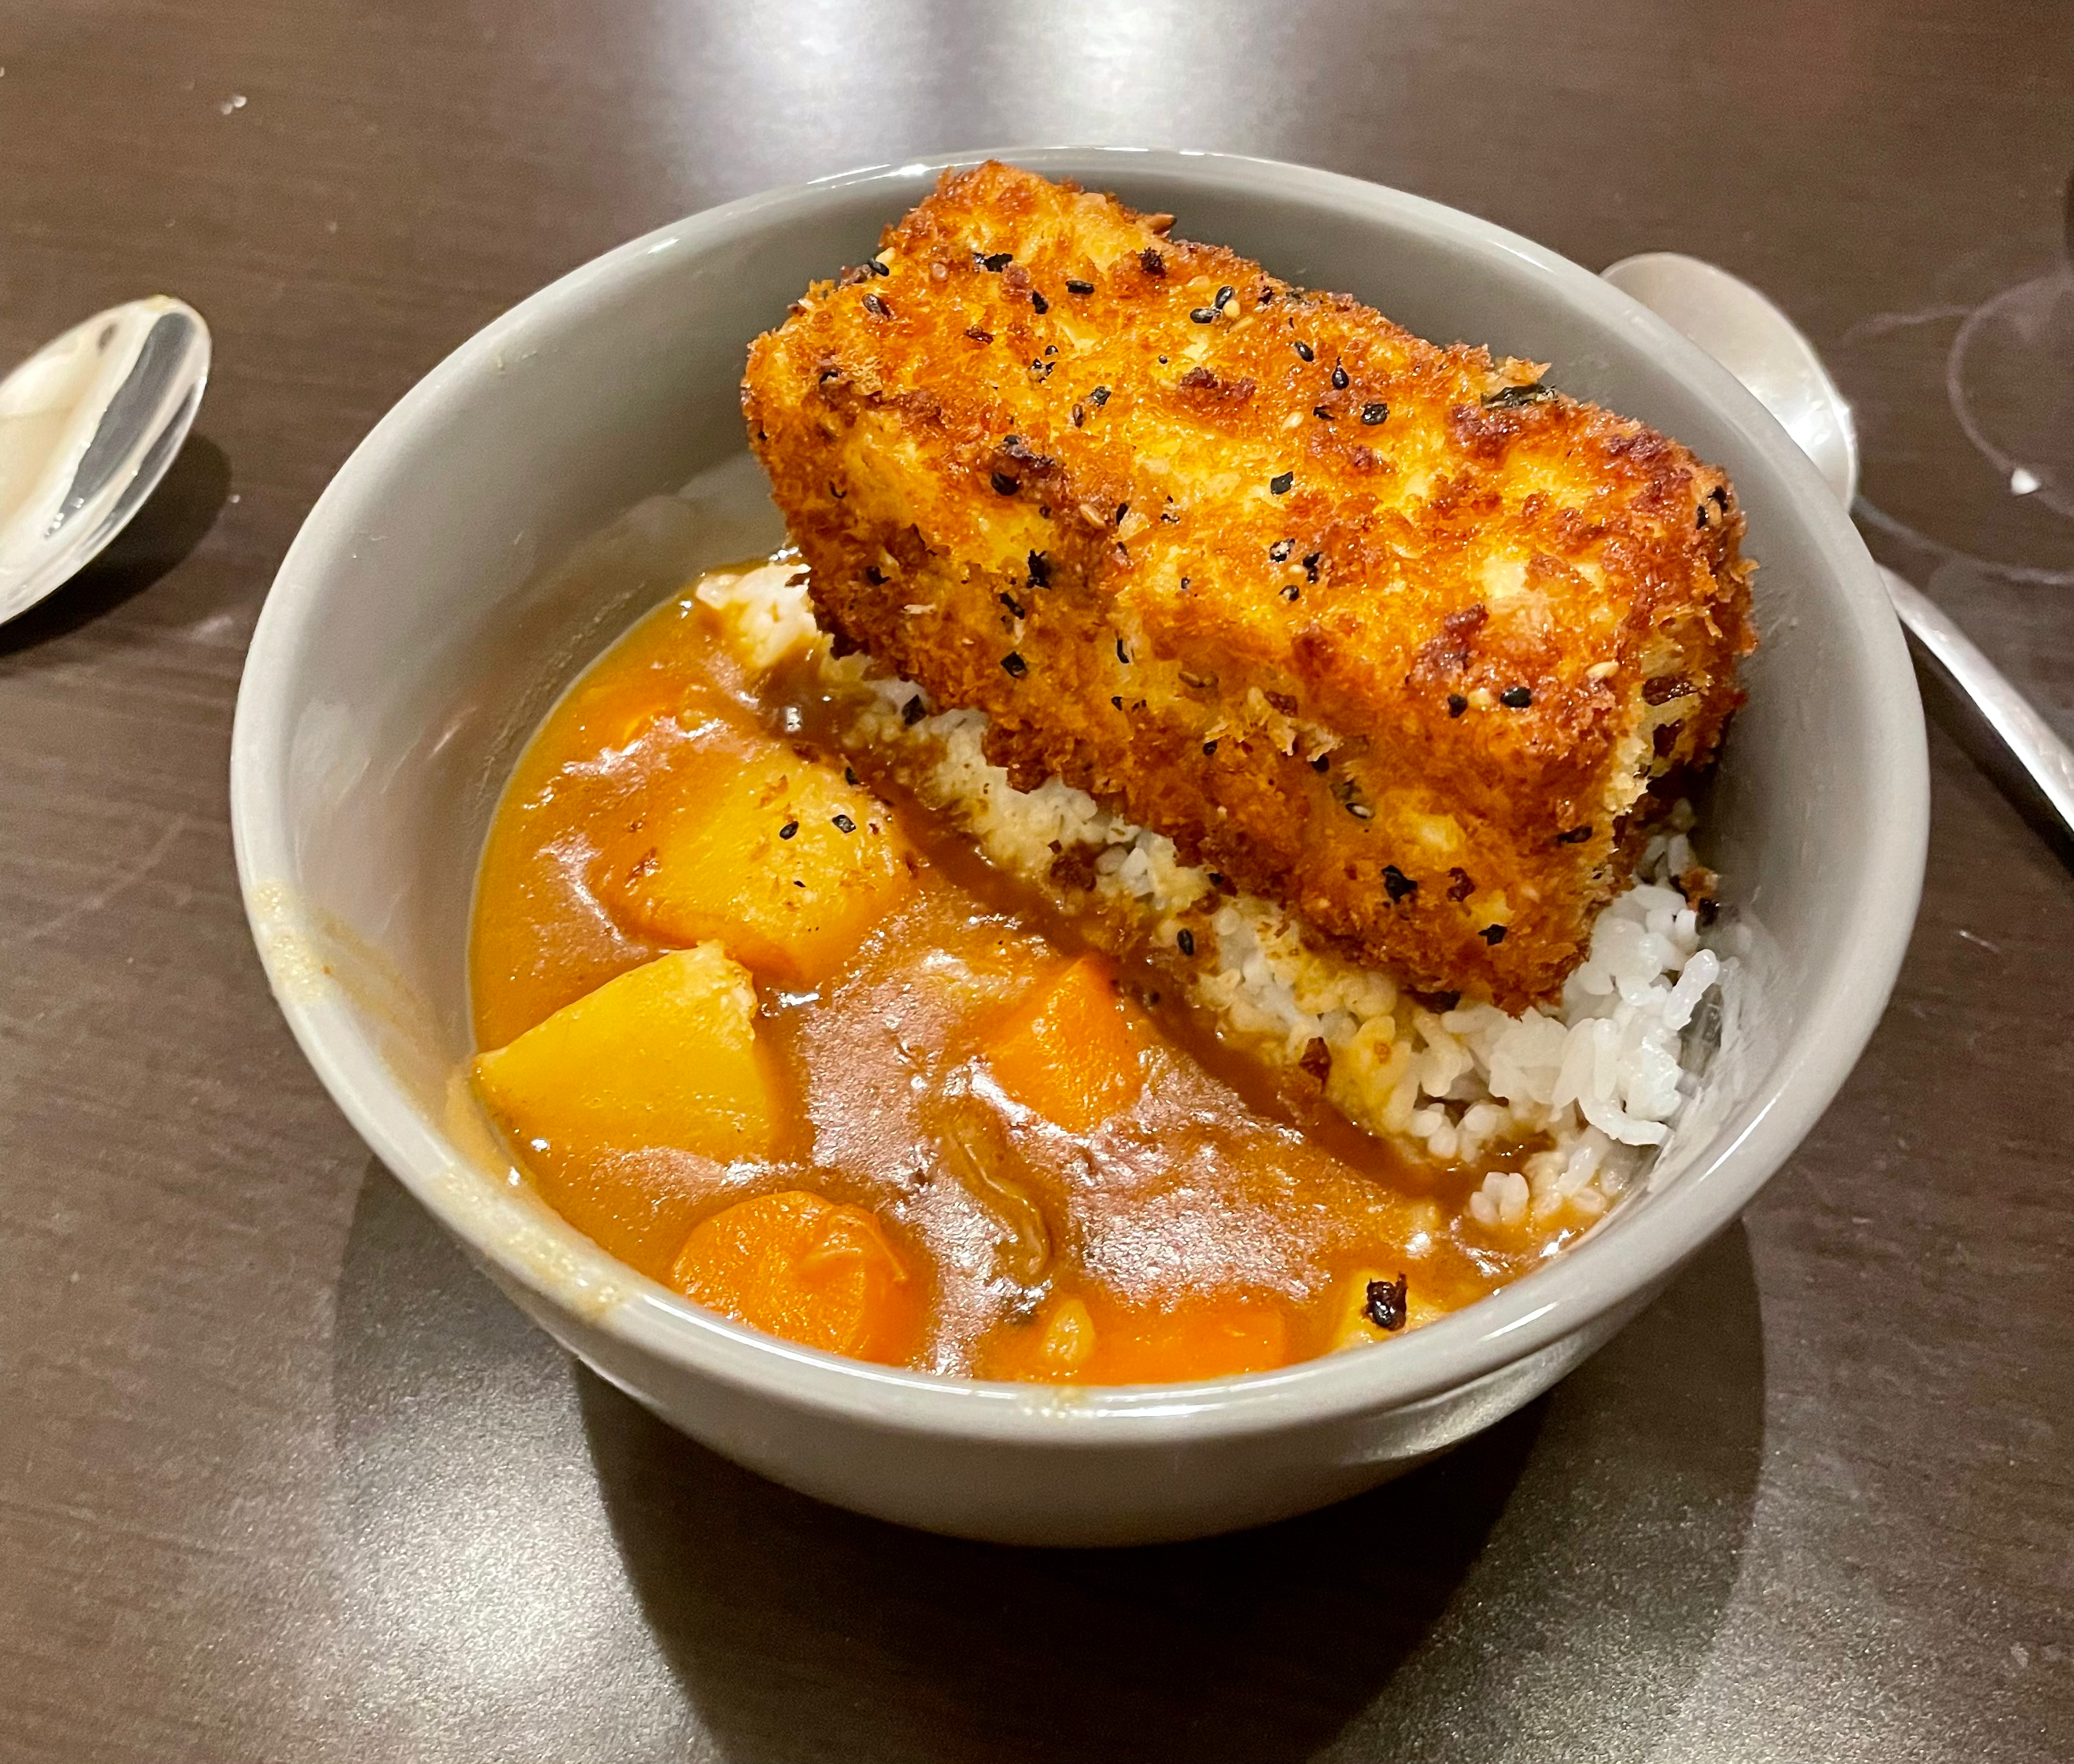 Katsu tofu with Japanese curry, made by my friend Angel!